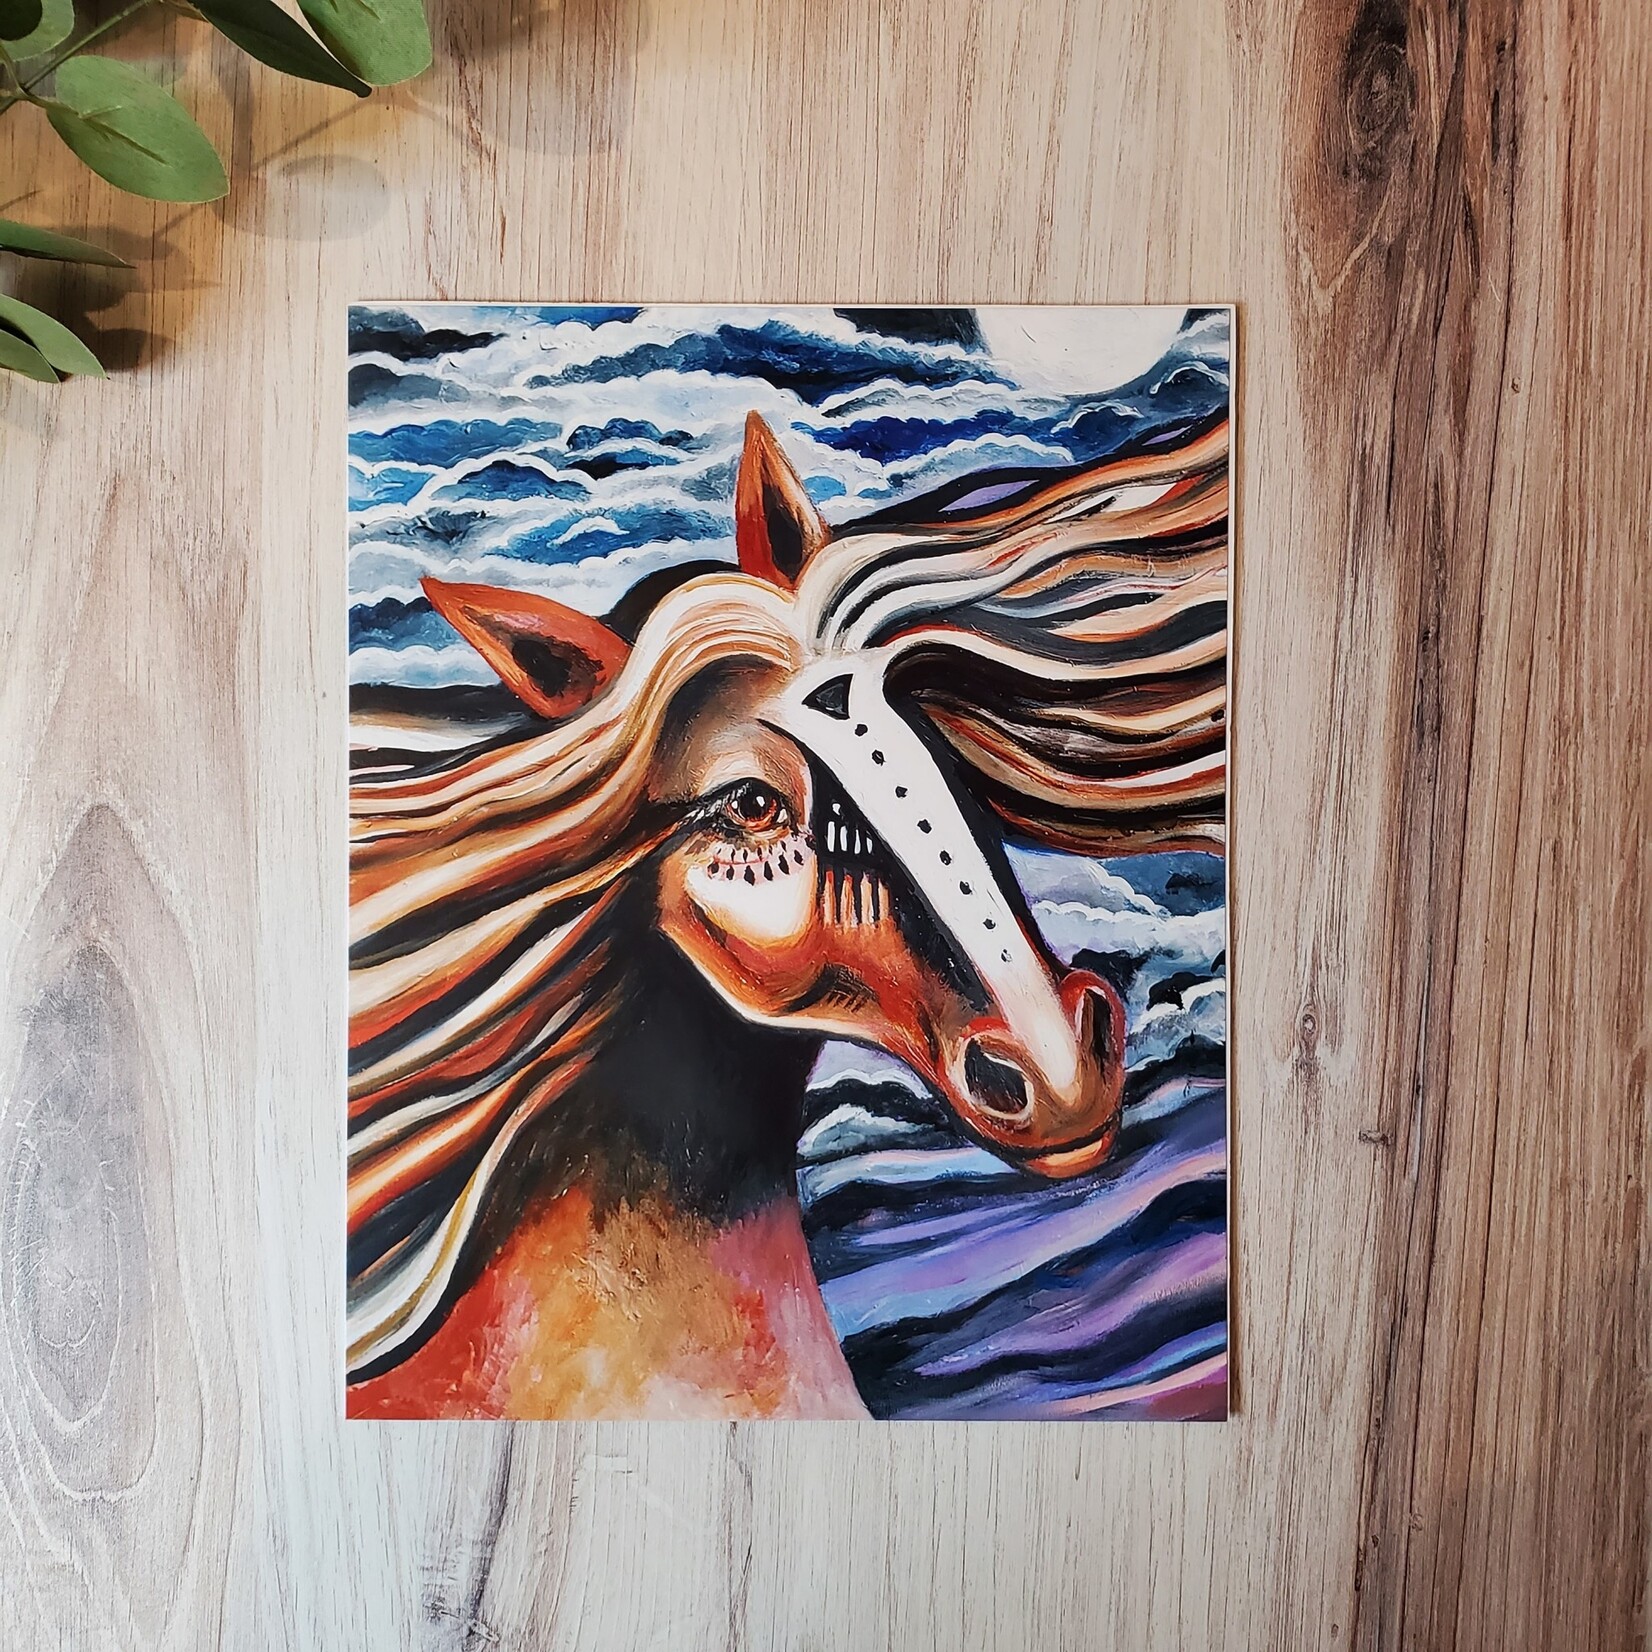 Asja Dawn "Stormy Horse" - 8x10